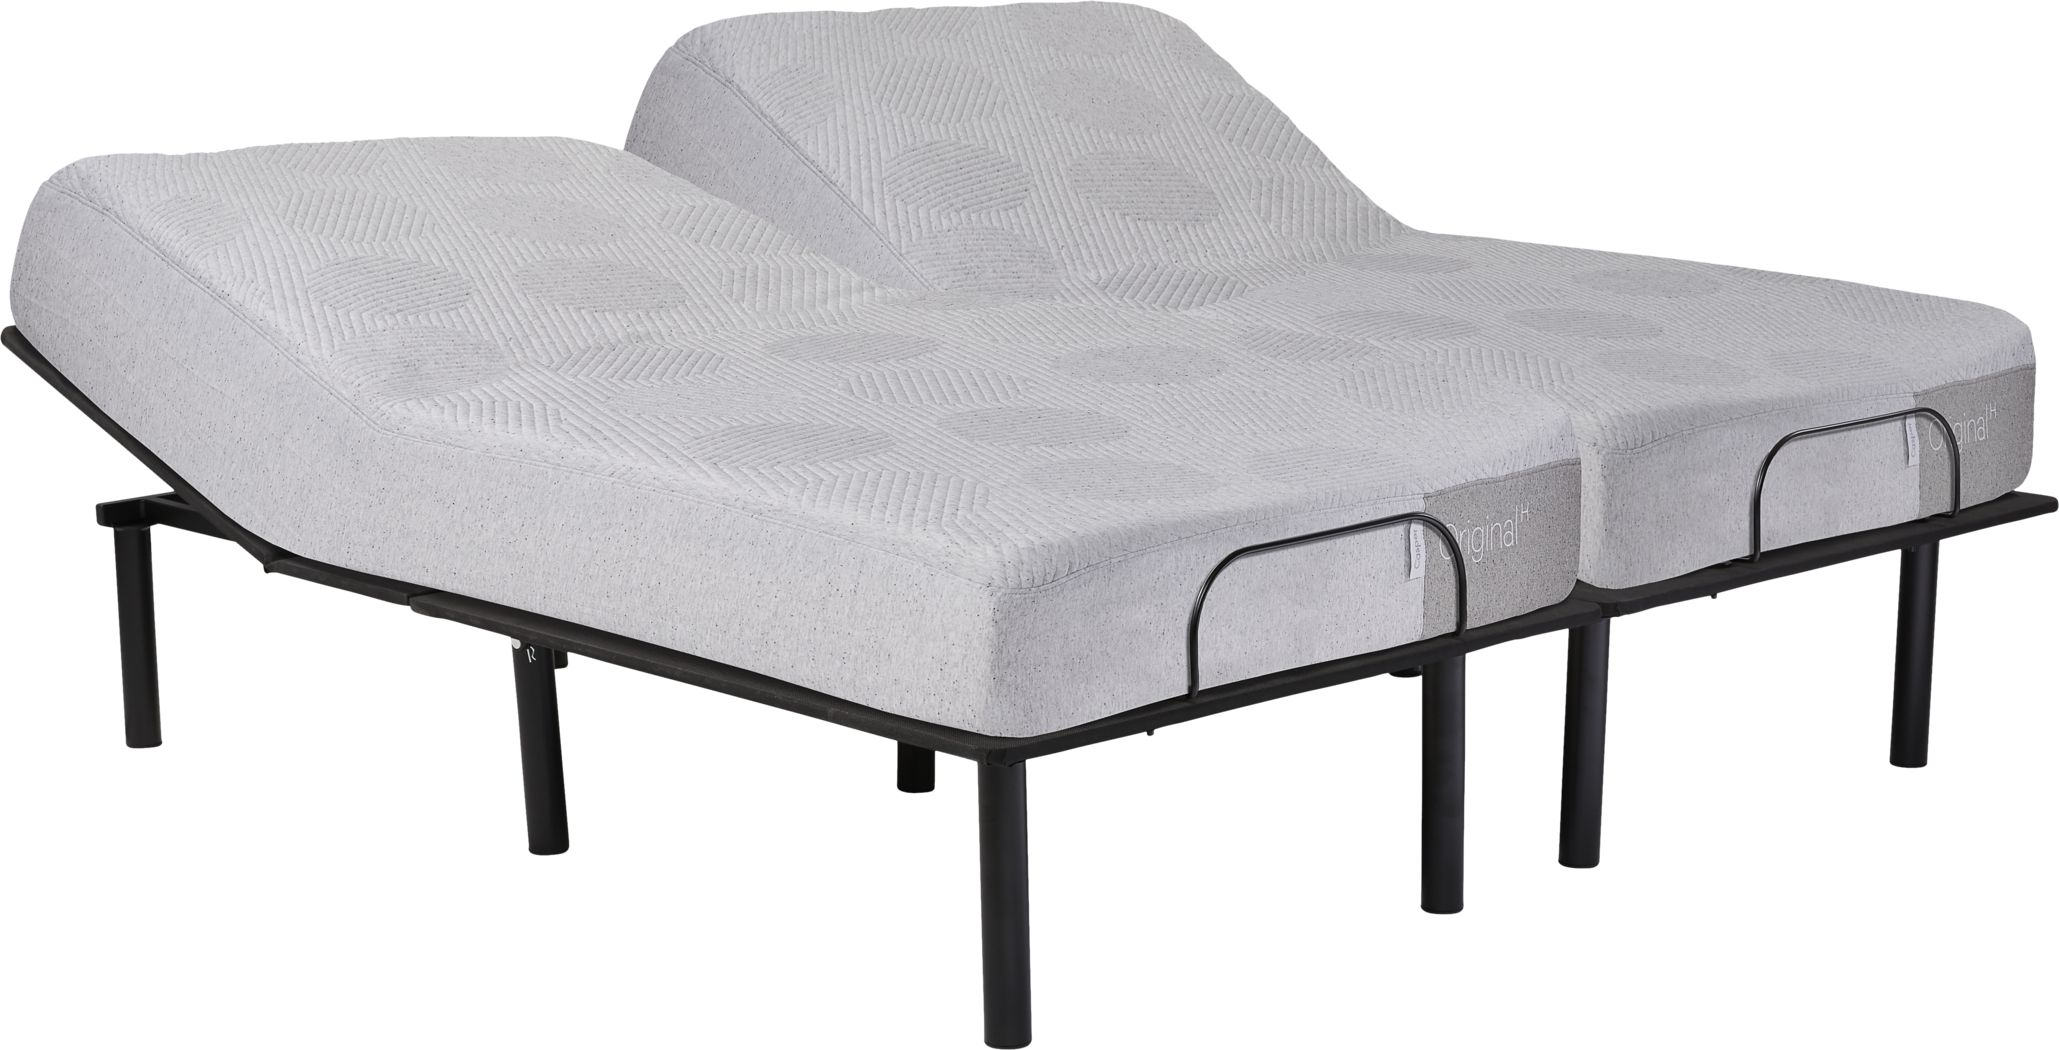 casper original hybrid king mattress